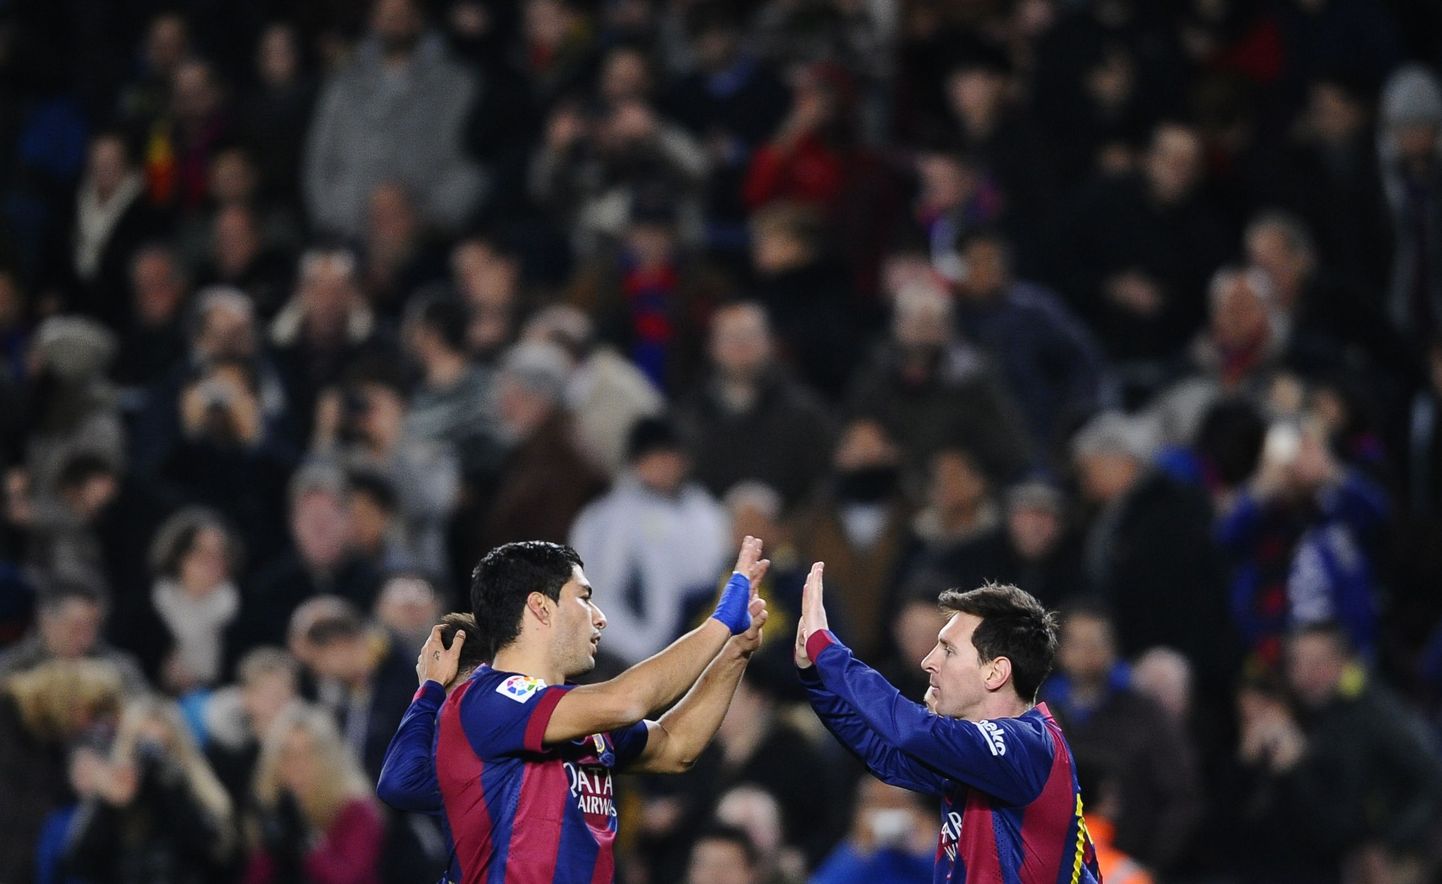 Barcelona superstaarid Luis Suarez ja Lionel Messi meeskonna fännide ees.